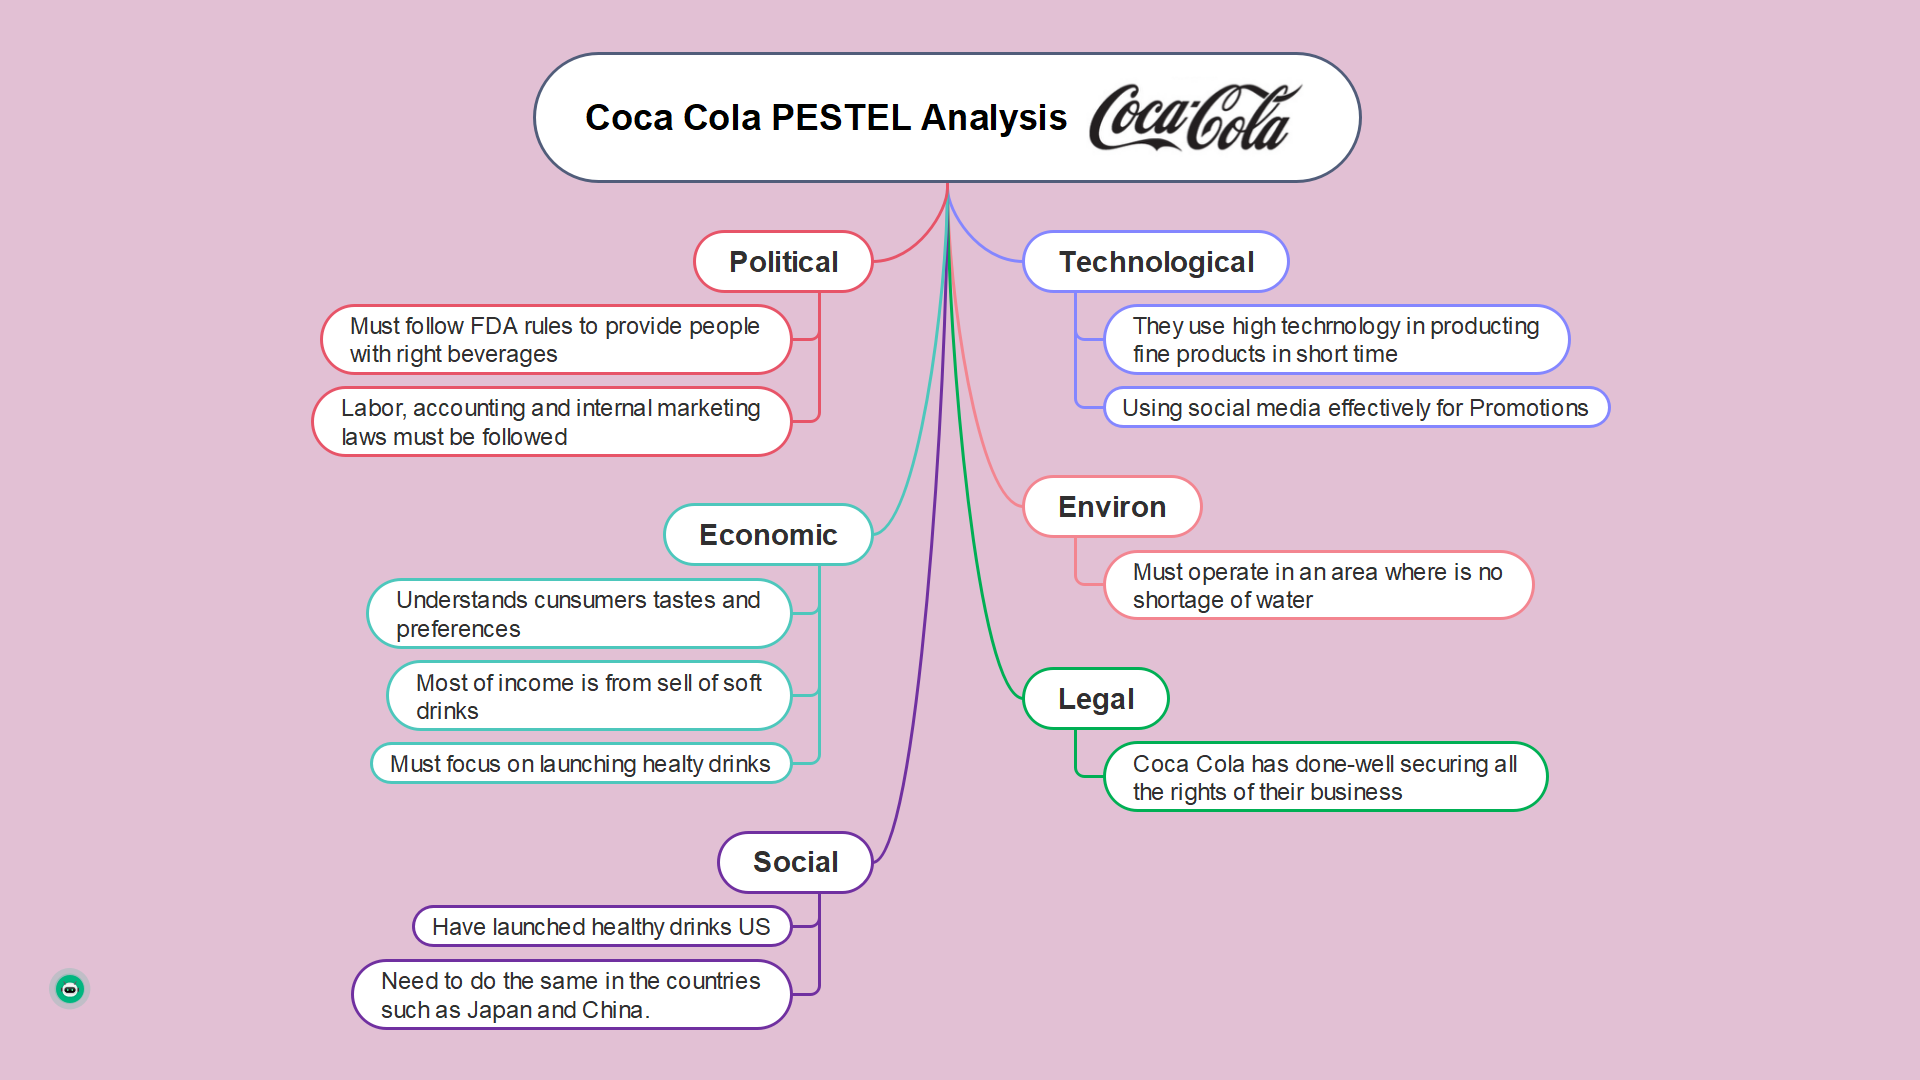 Coca-Cola PESTEL Analysis